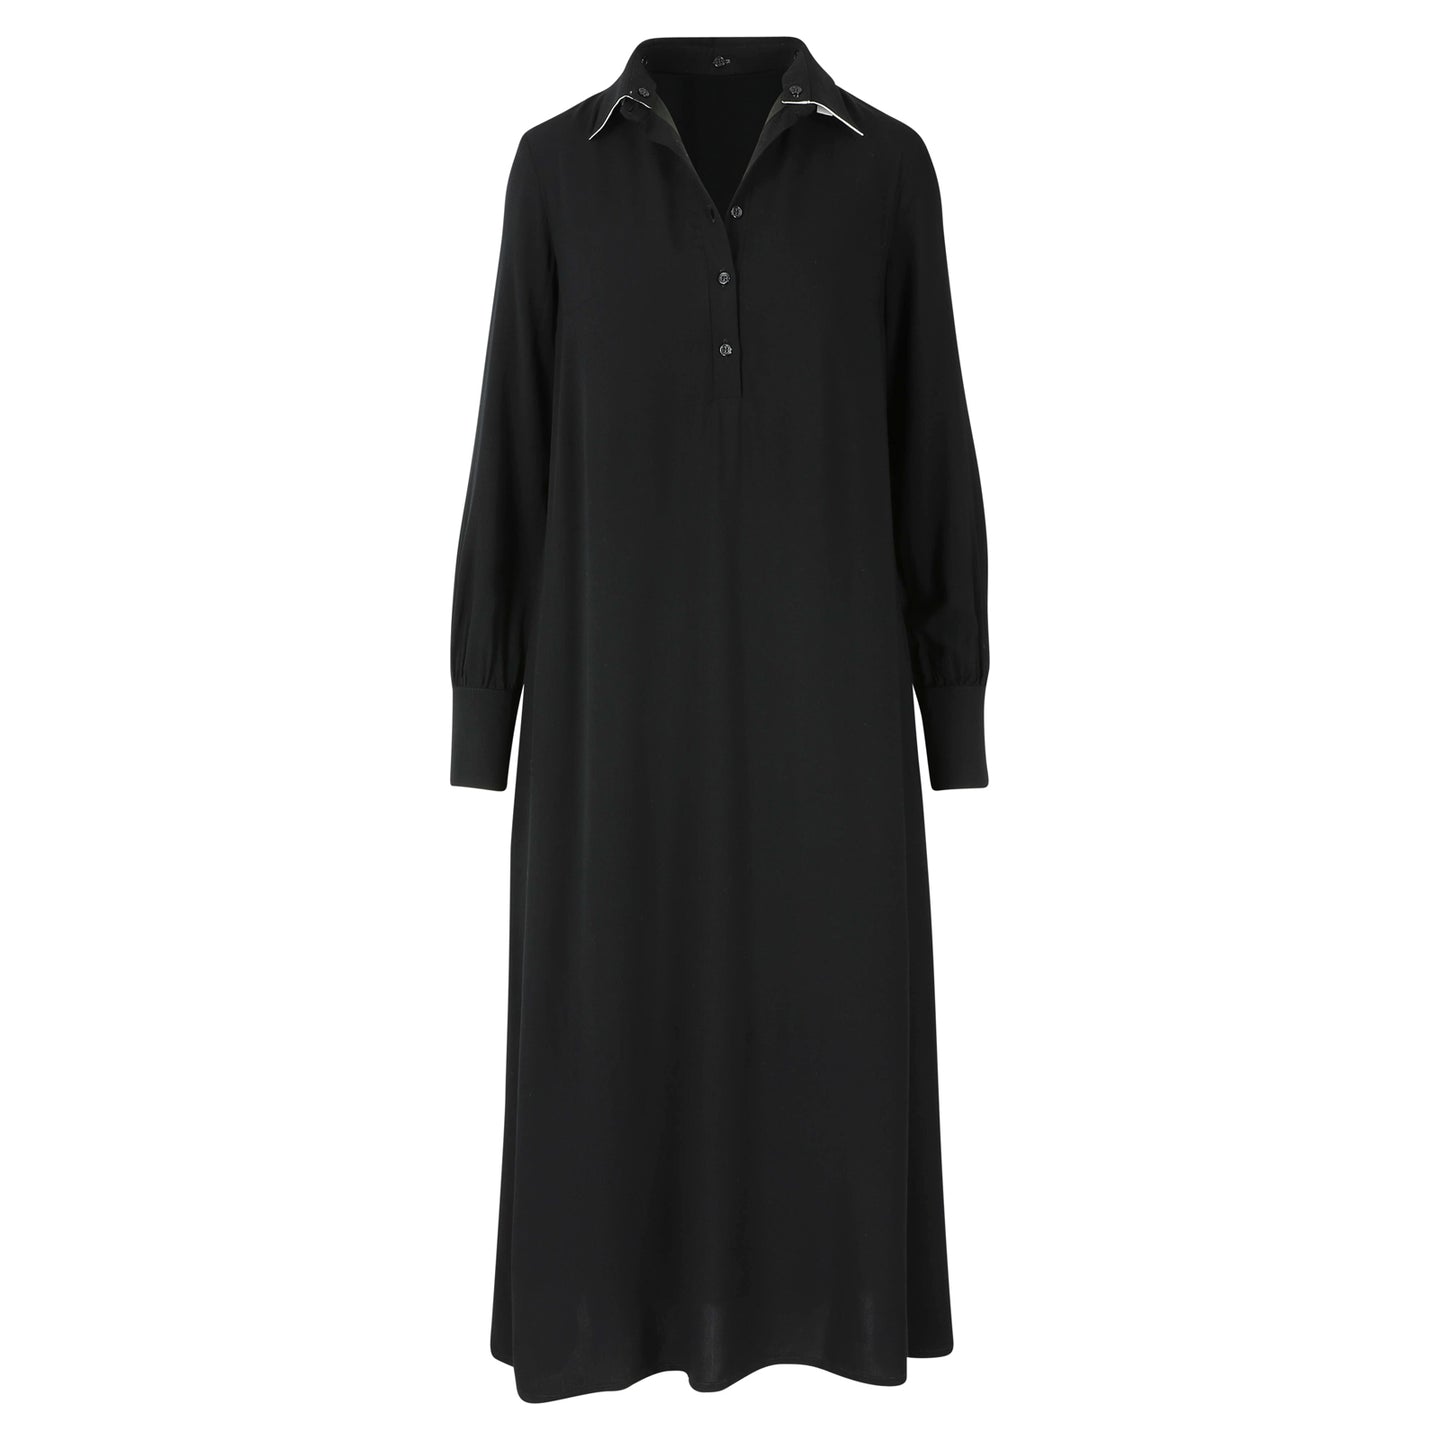 Polly Jean Dress Black - Last size: 44